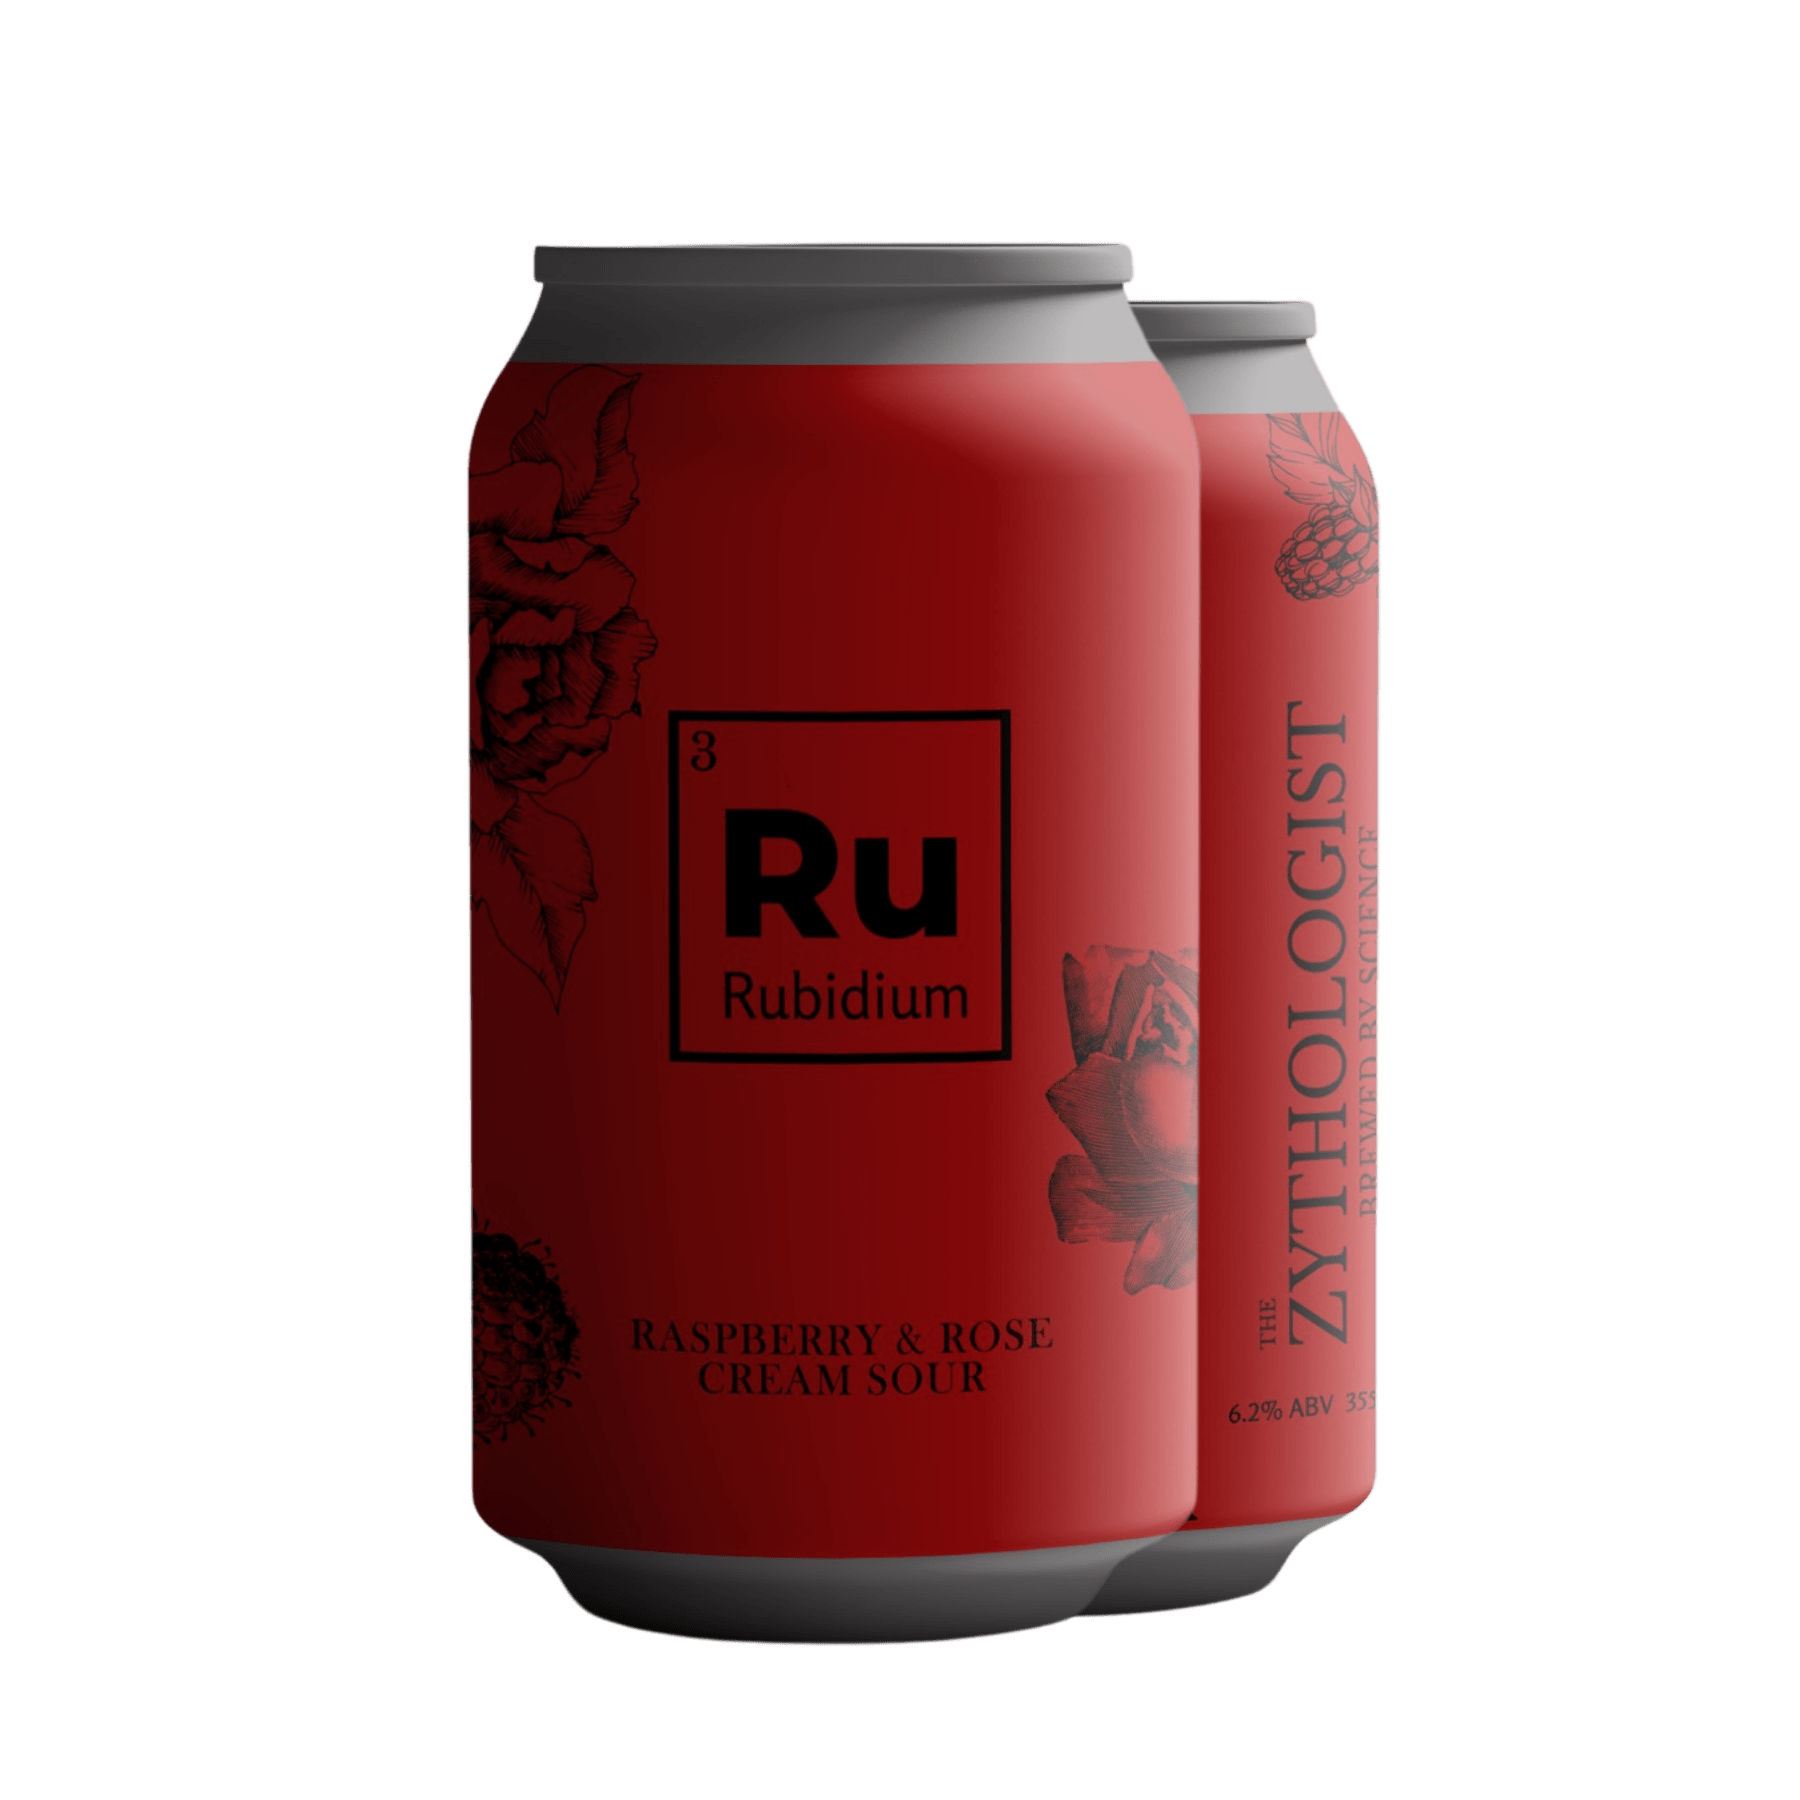 The Zythologist Rubidium Raspberry & Rose Cream Sour